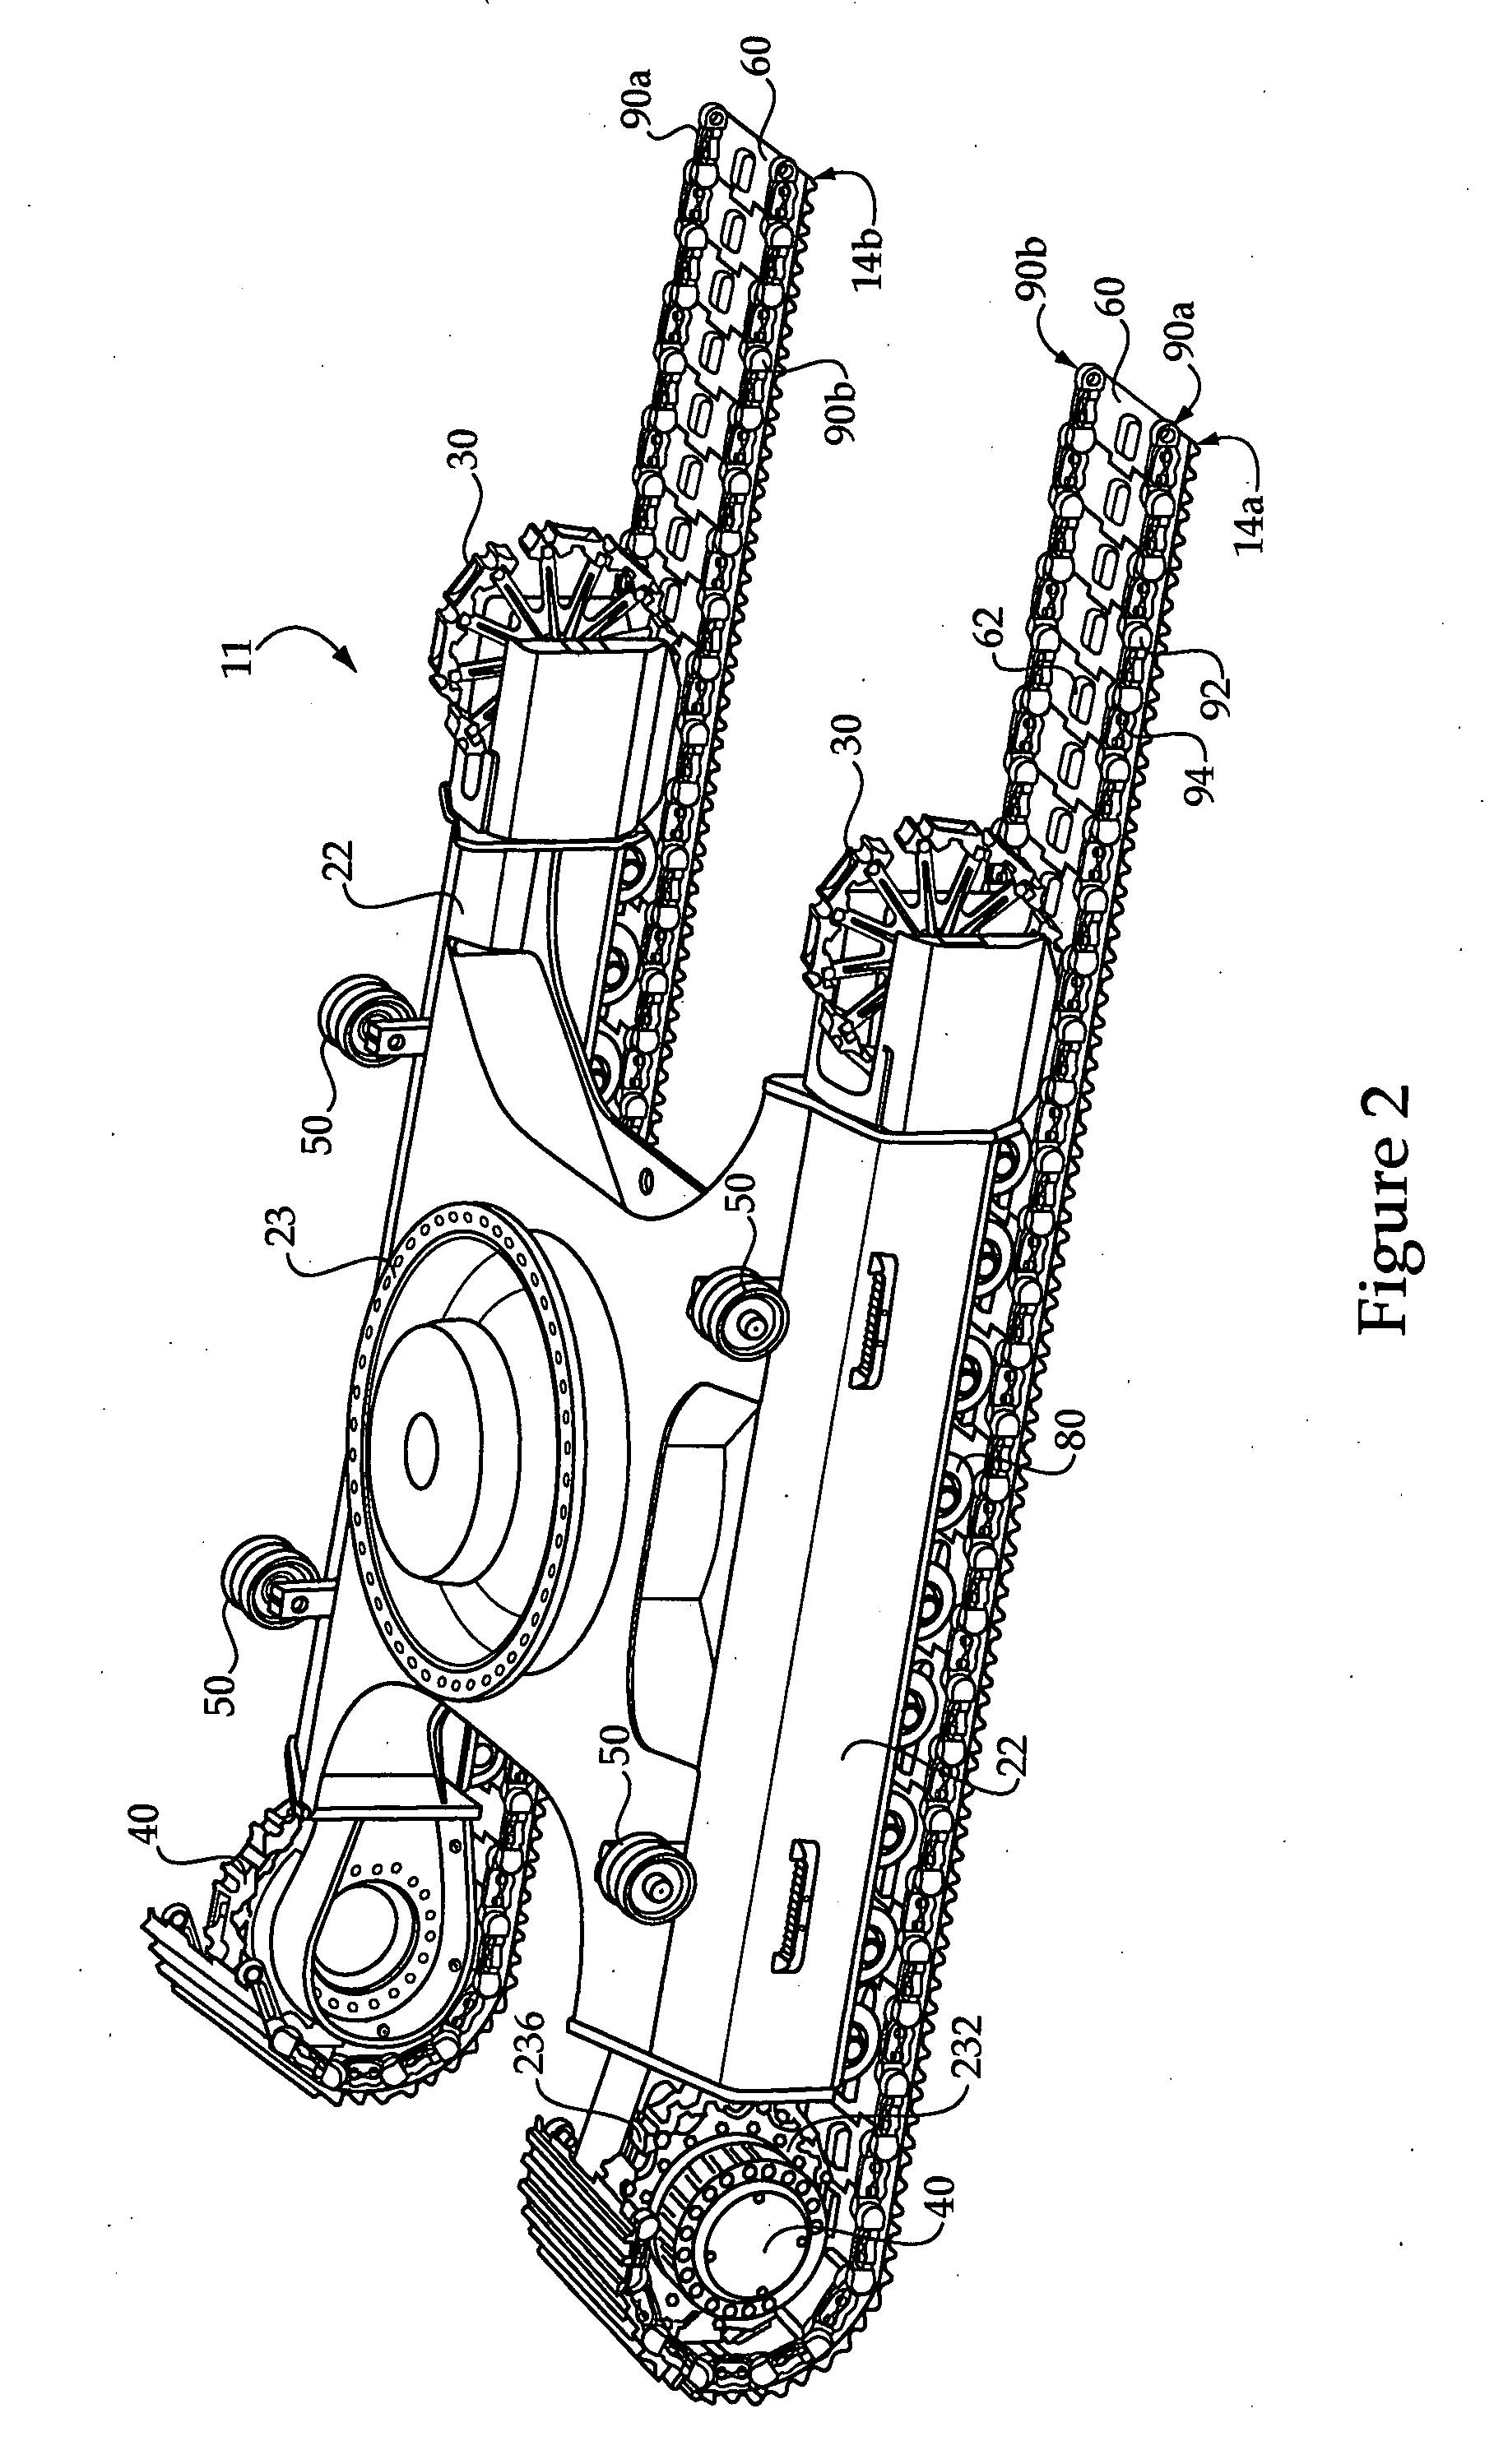 Machine track system and machine track segment